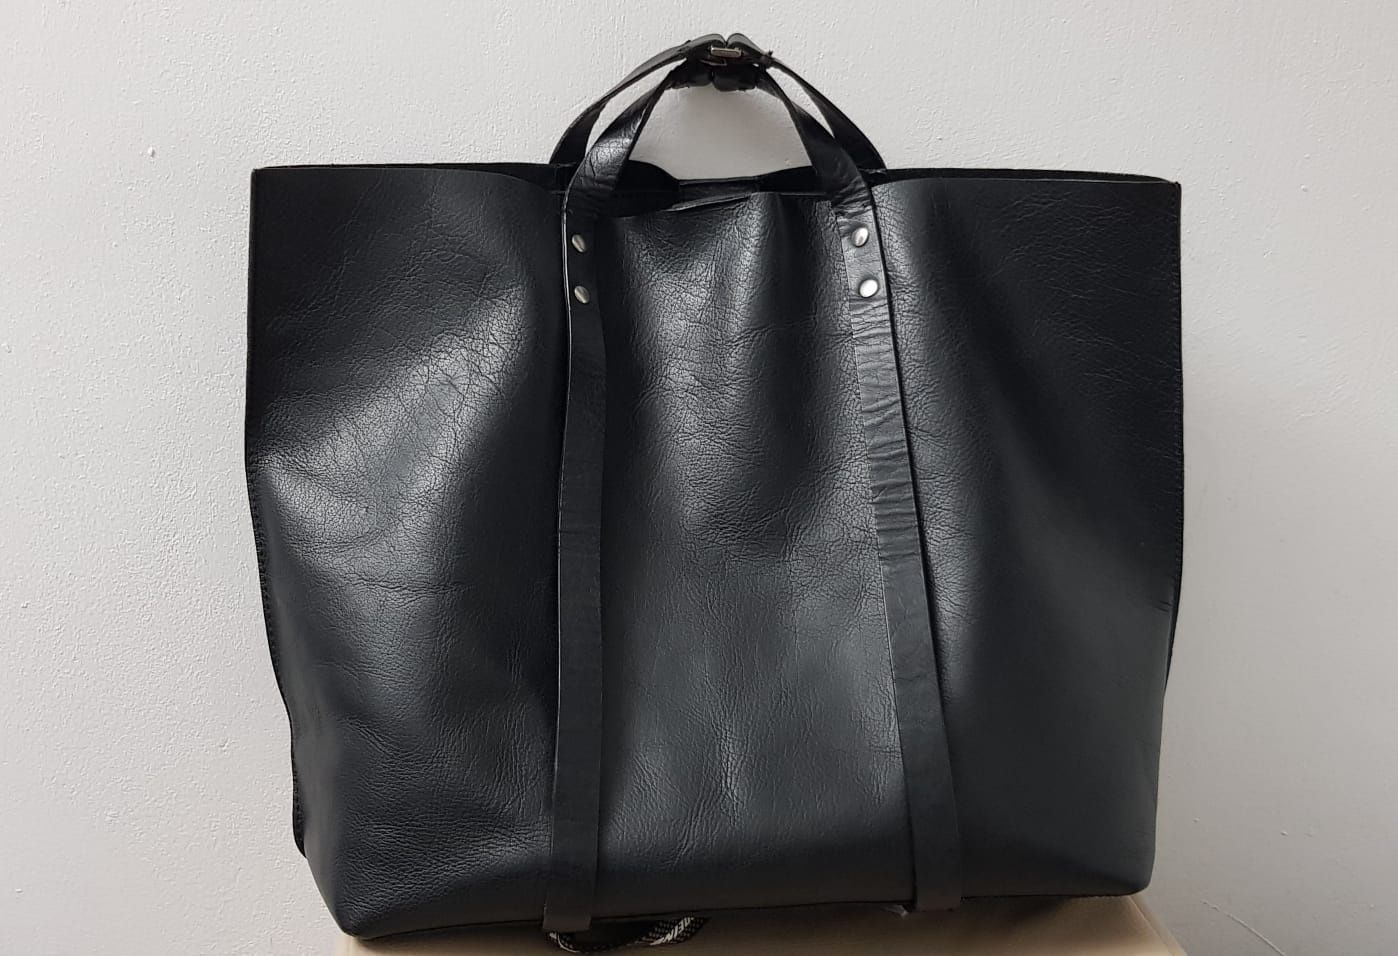 Zara shopper bag leather